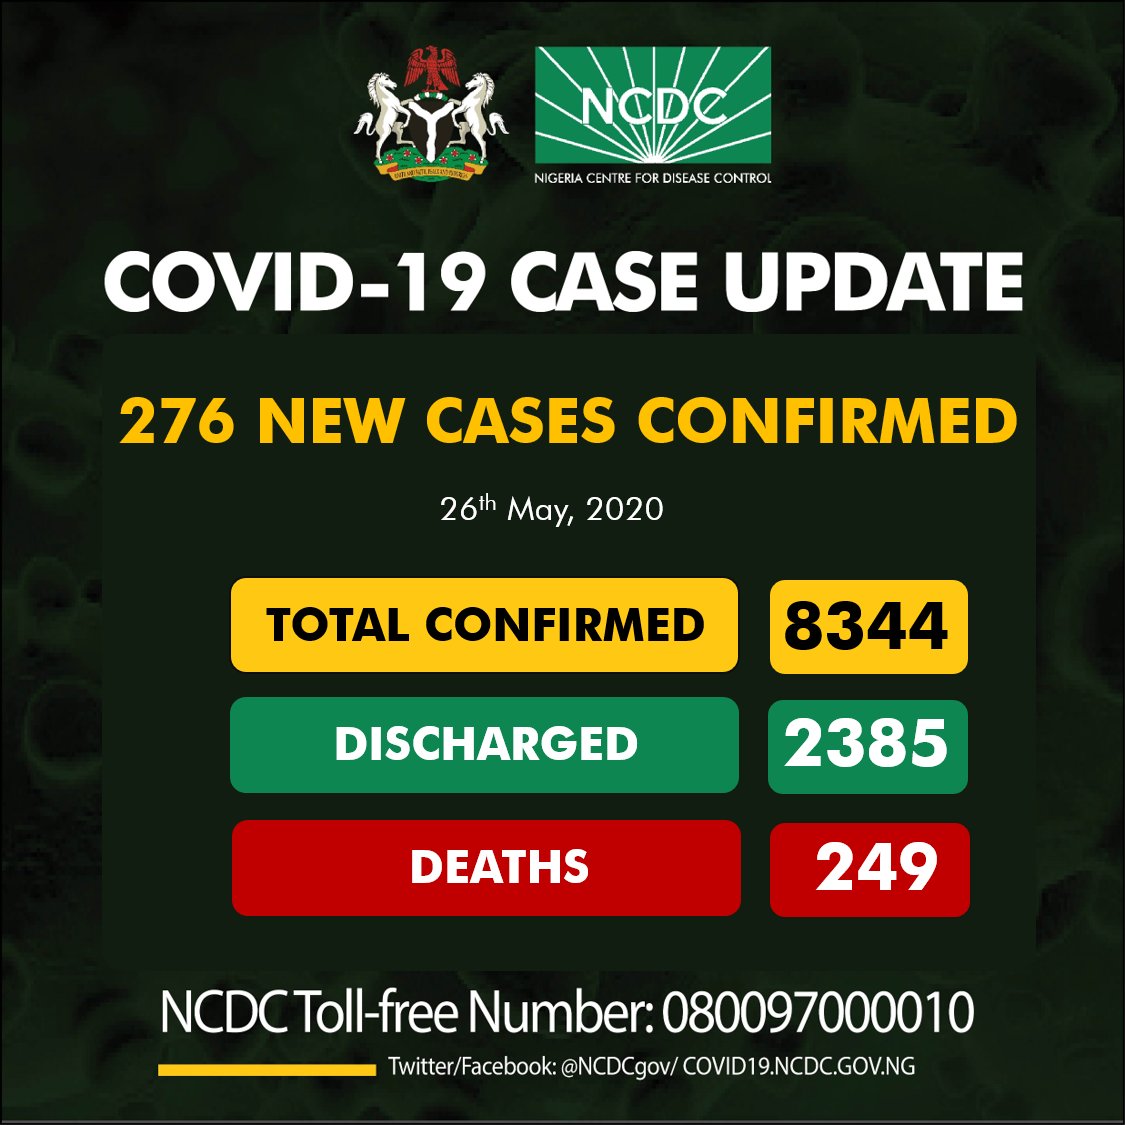 276 new cases of #COVID19;

Lagos-161
Rivers-36
Edo-27
Kaduna-19
Nasarawa-10
Oyo-6
Kano-4
Delta-3
Ebonyi-3
Gombe-2
Ogun-1
Ondo-1
Borno-1
Abia-1
Bauchi-1

8344 cases of #COVID19 in Nigeria
Discharged: 2385
Deaths: 249

#TakeResponsibility